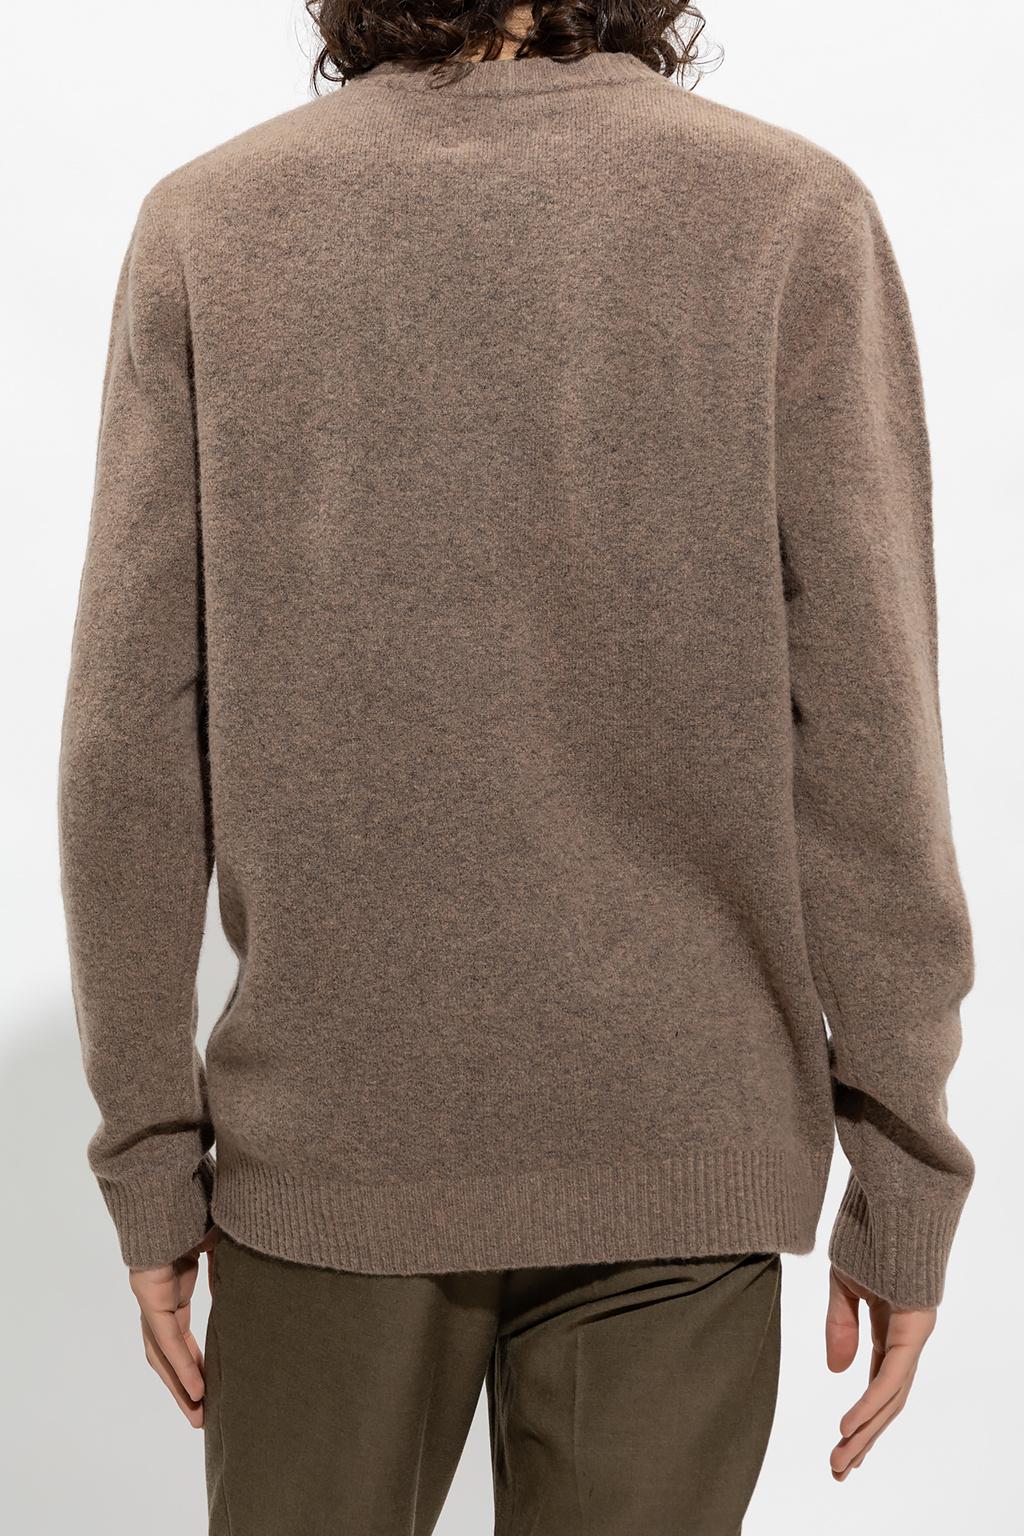 Samsøe & Samsøe 'butler' Sweater With Round Neck in Natural for Men | Lyst